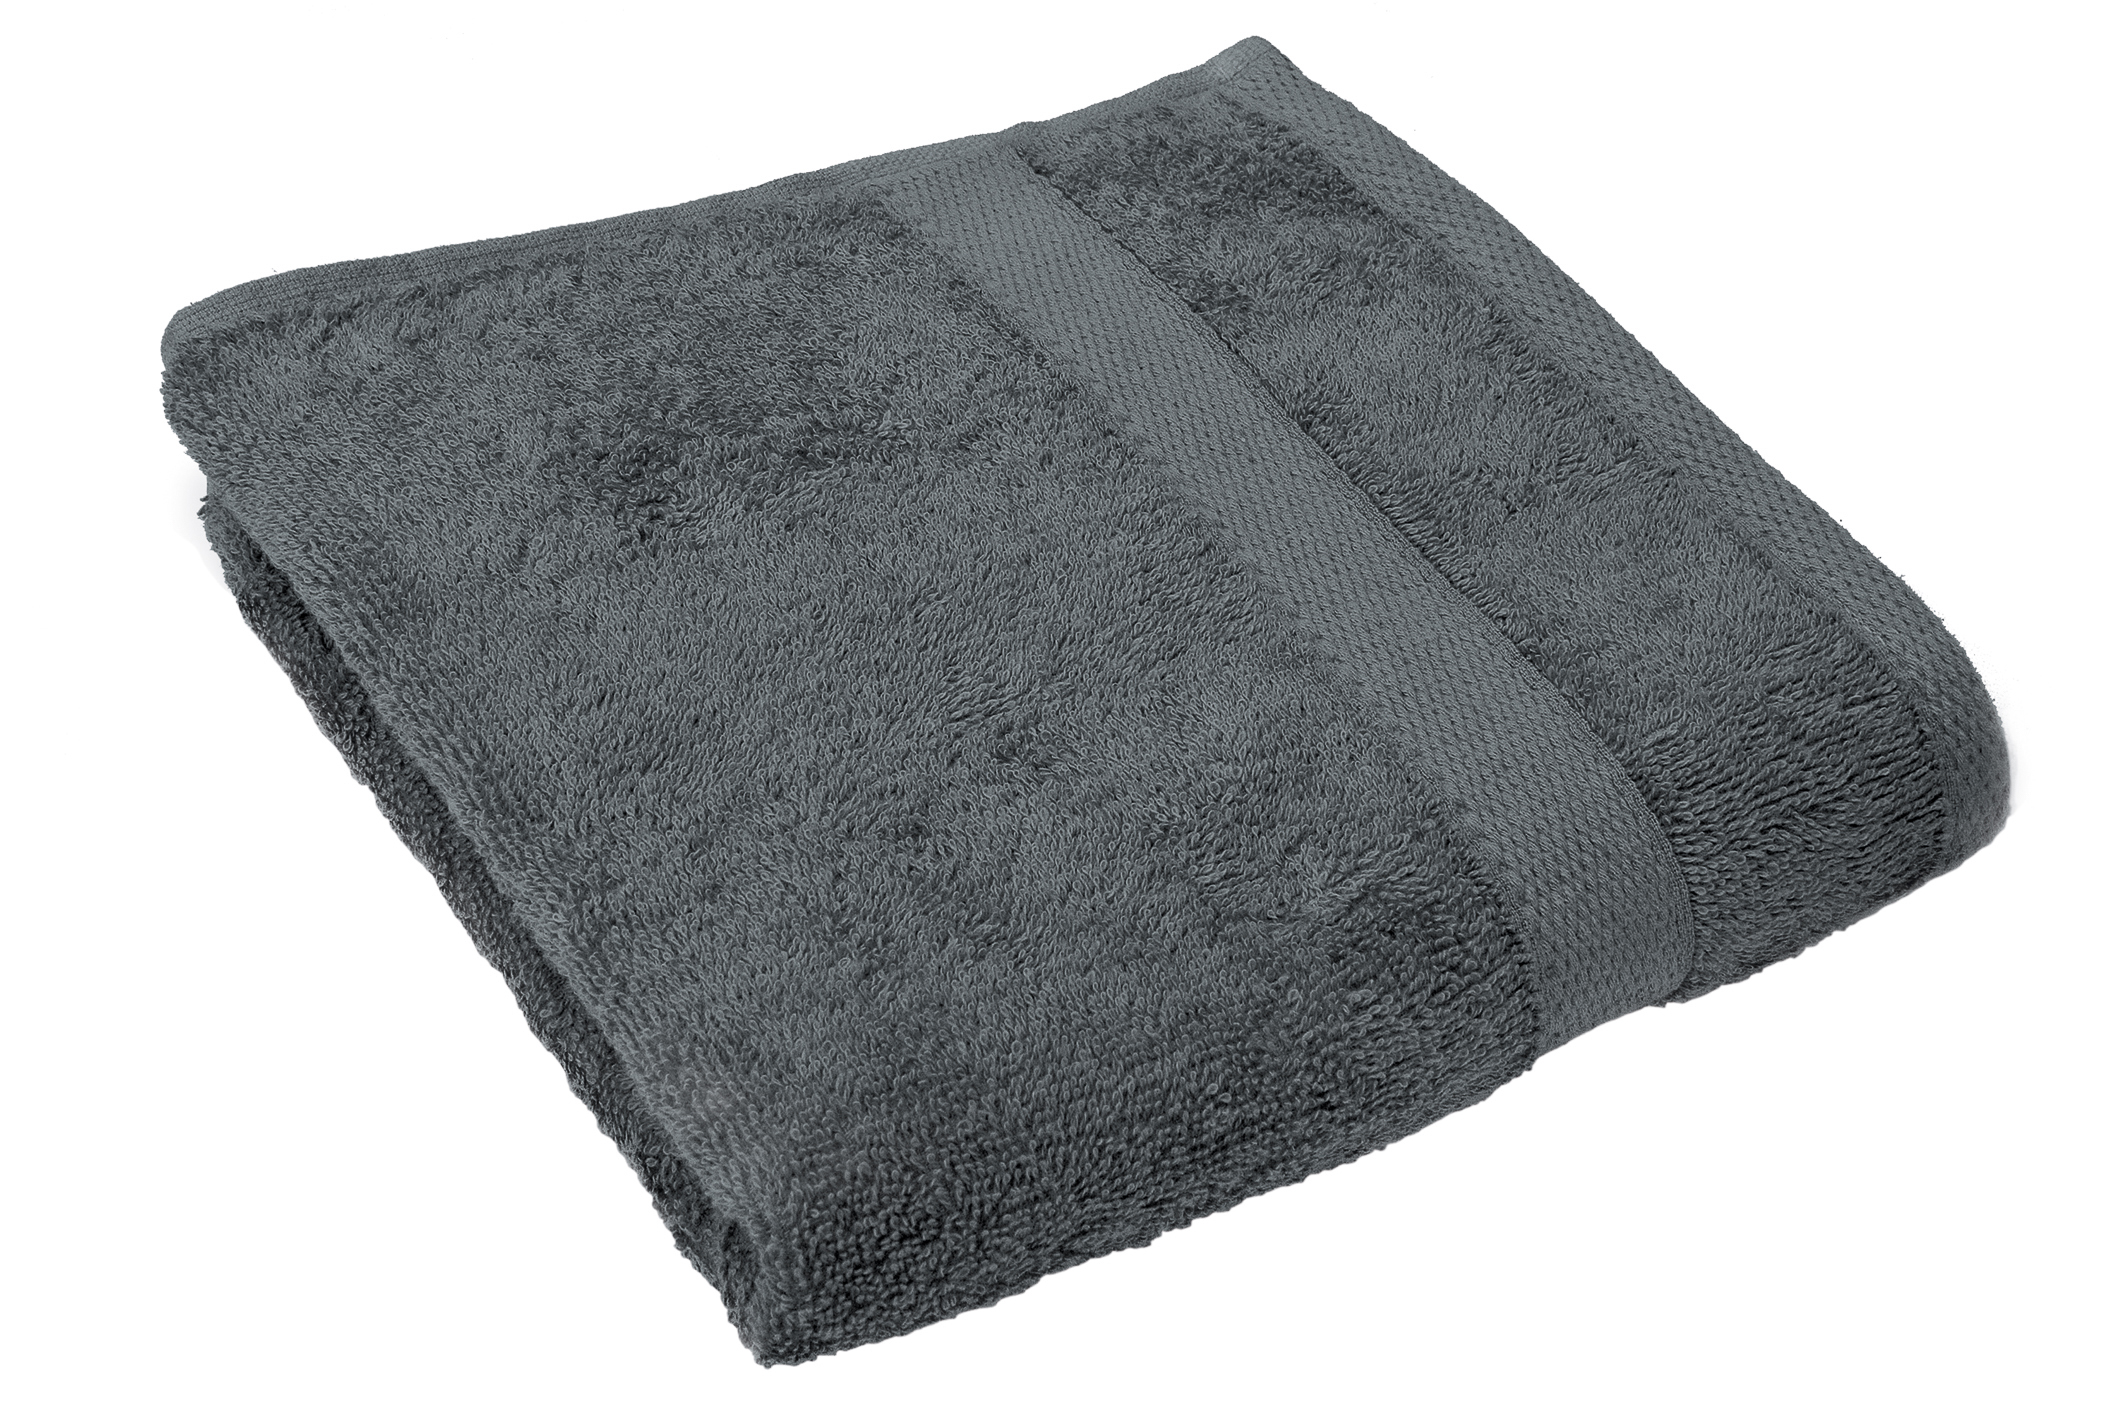 Shower towel 100x150cm, antracite grey